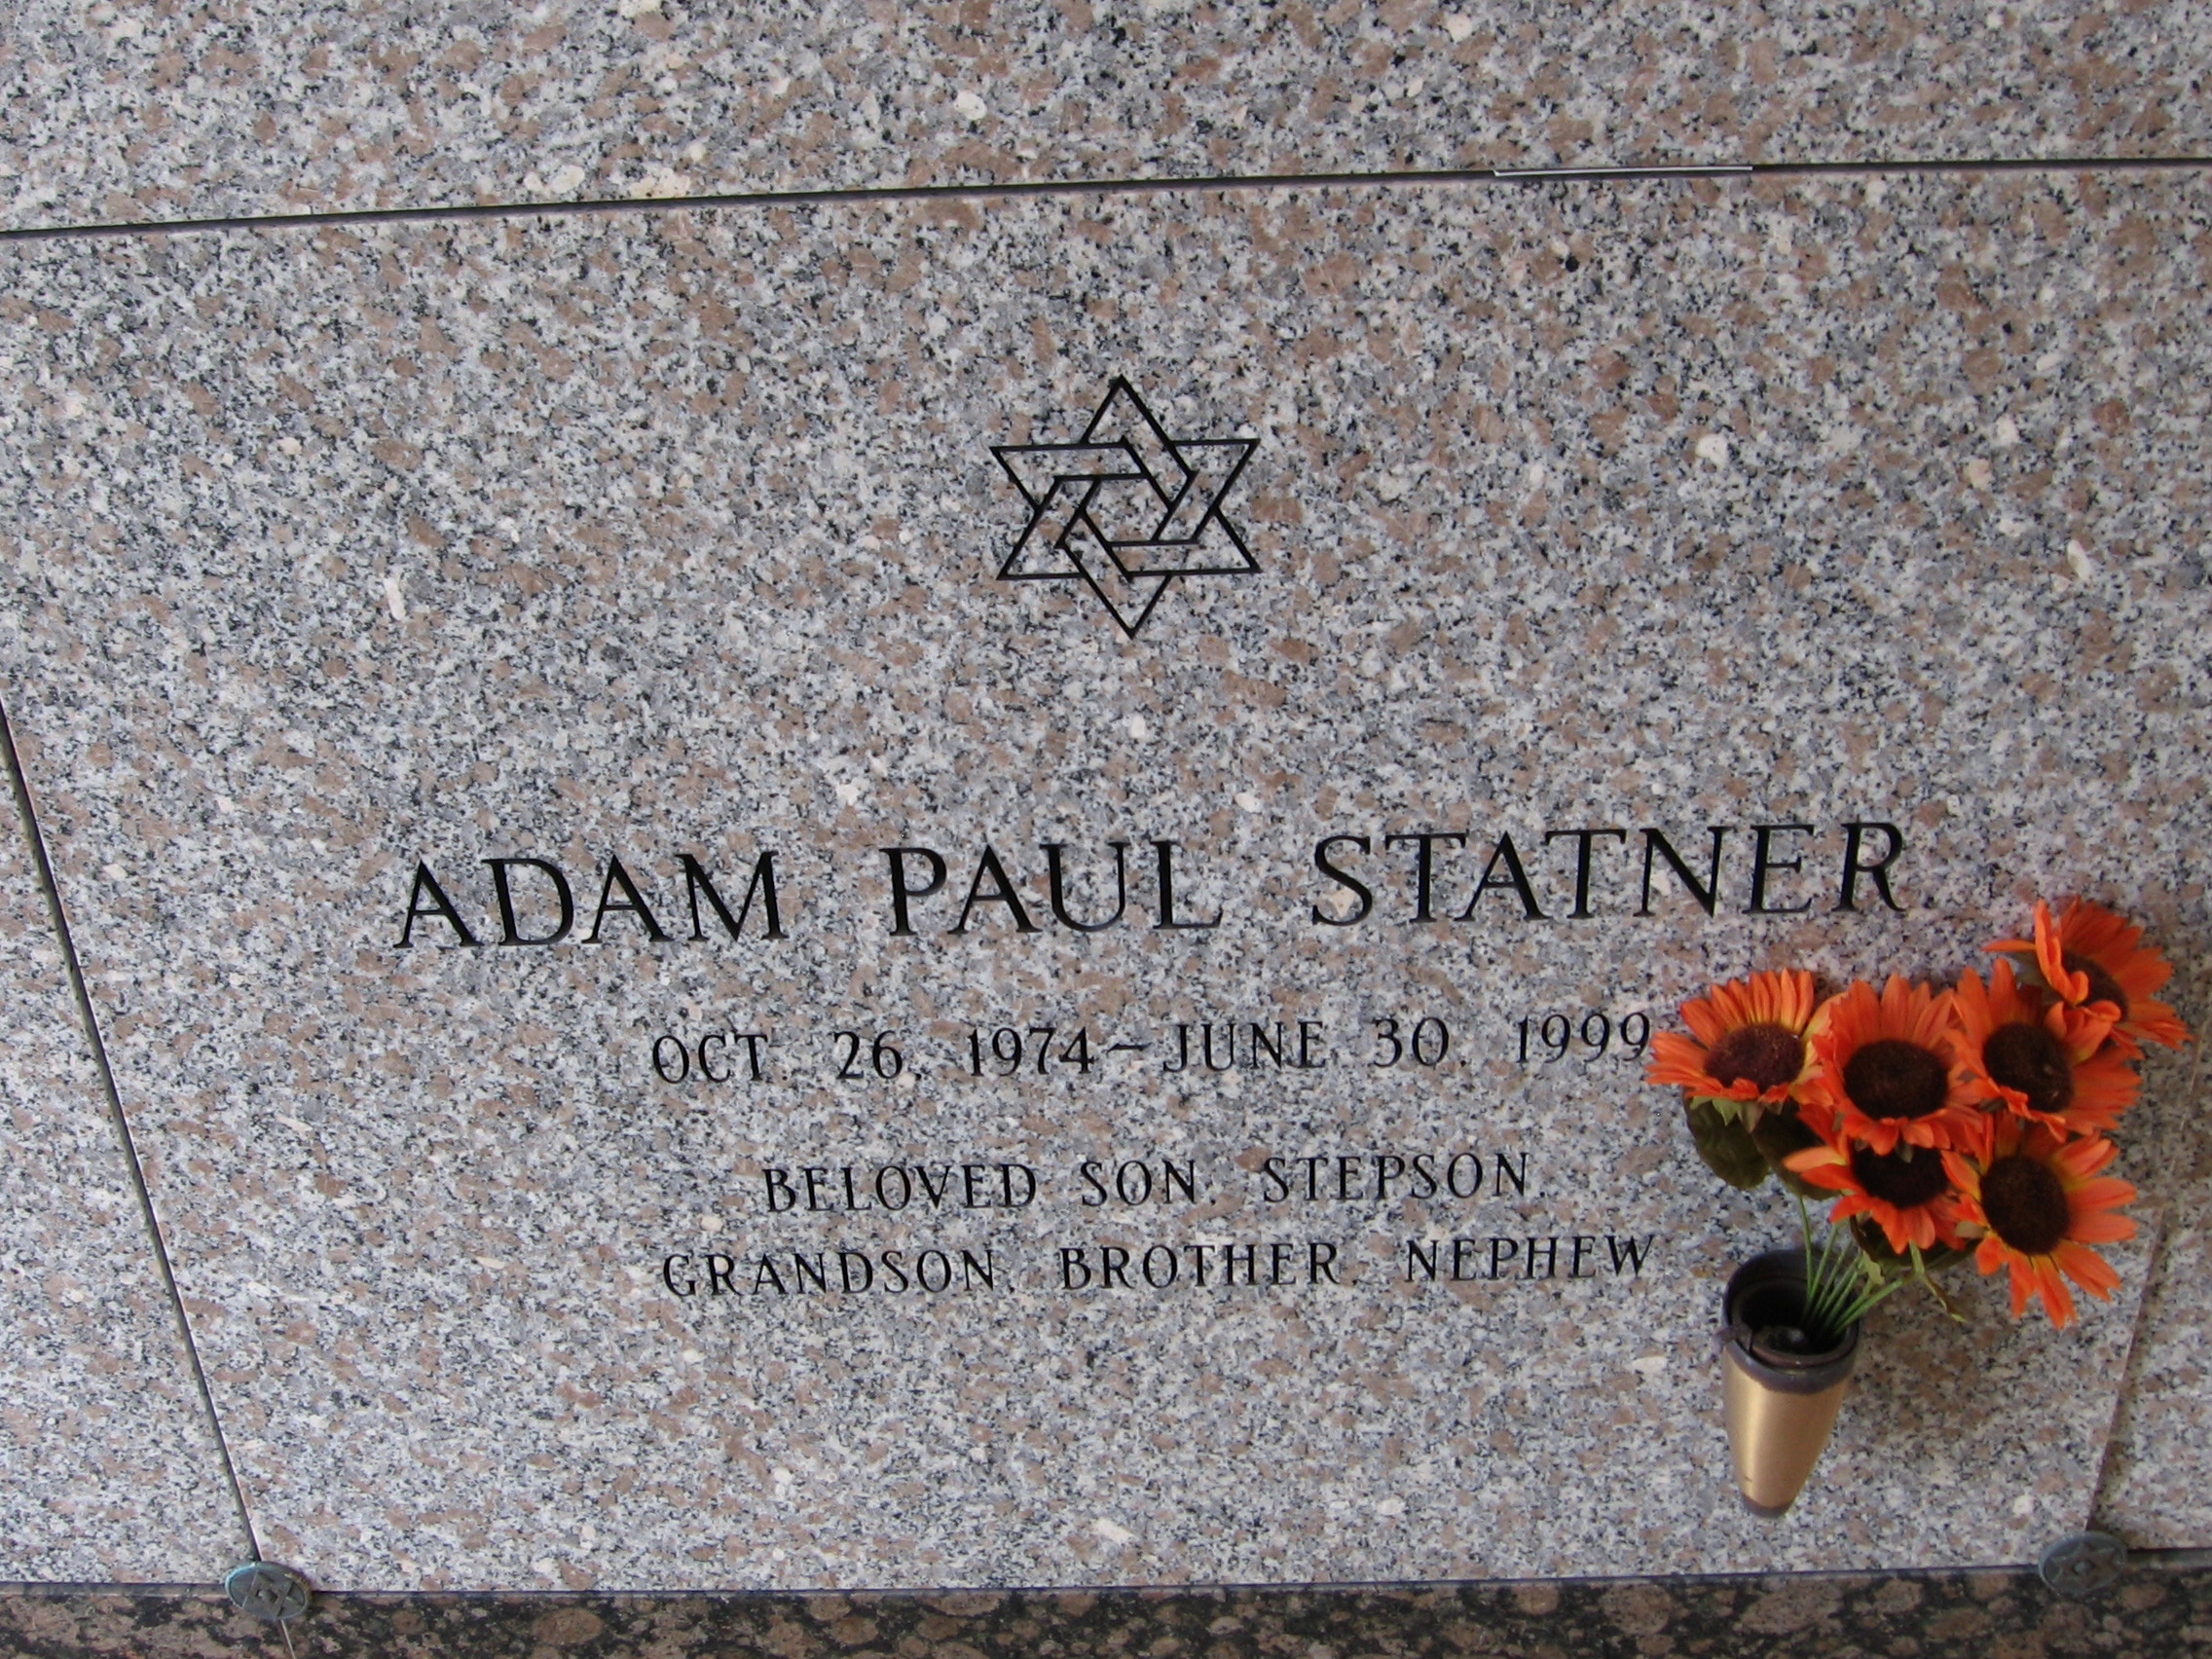 Adam Paul Statner